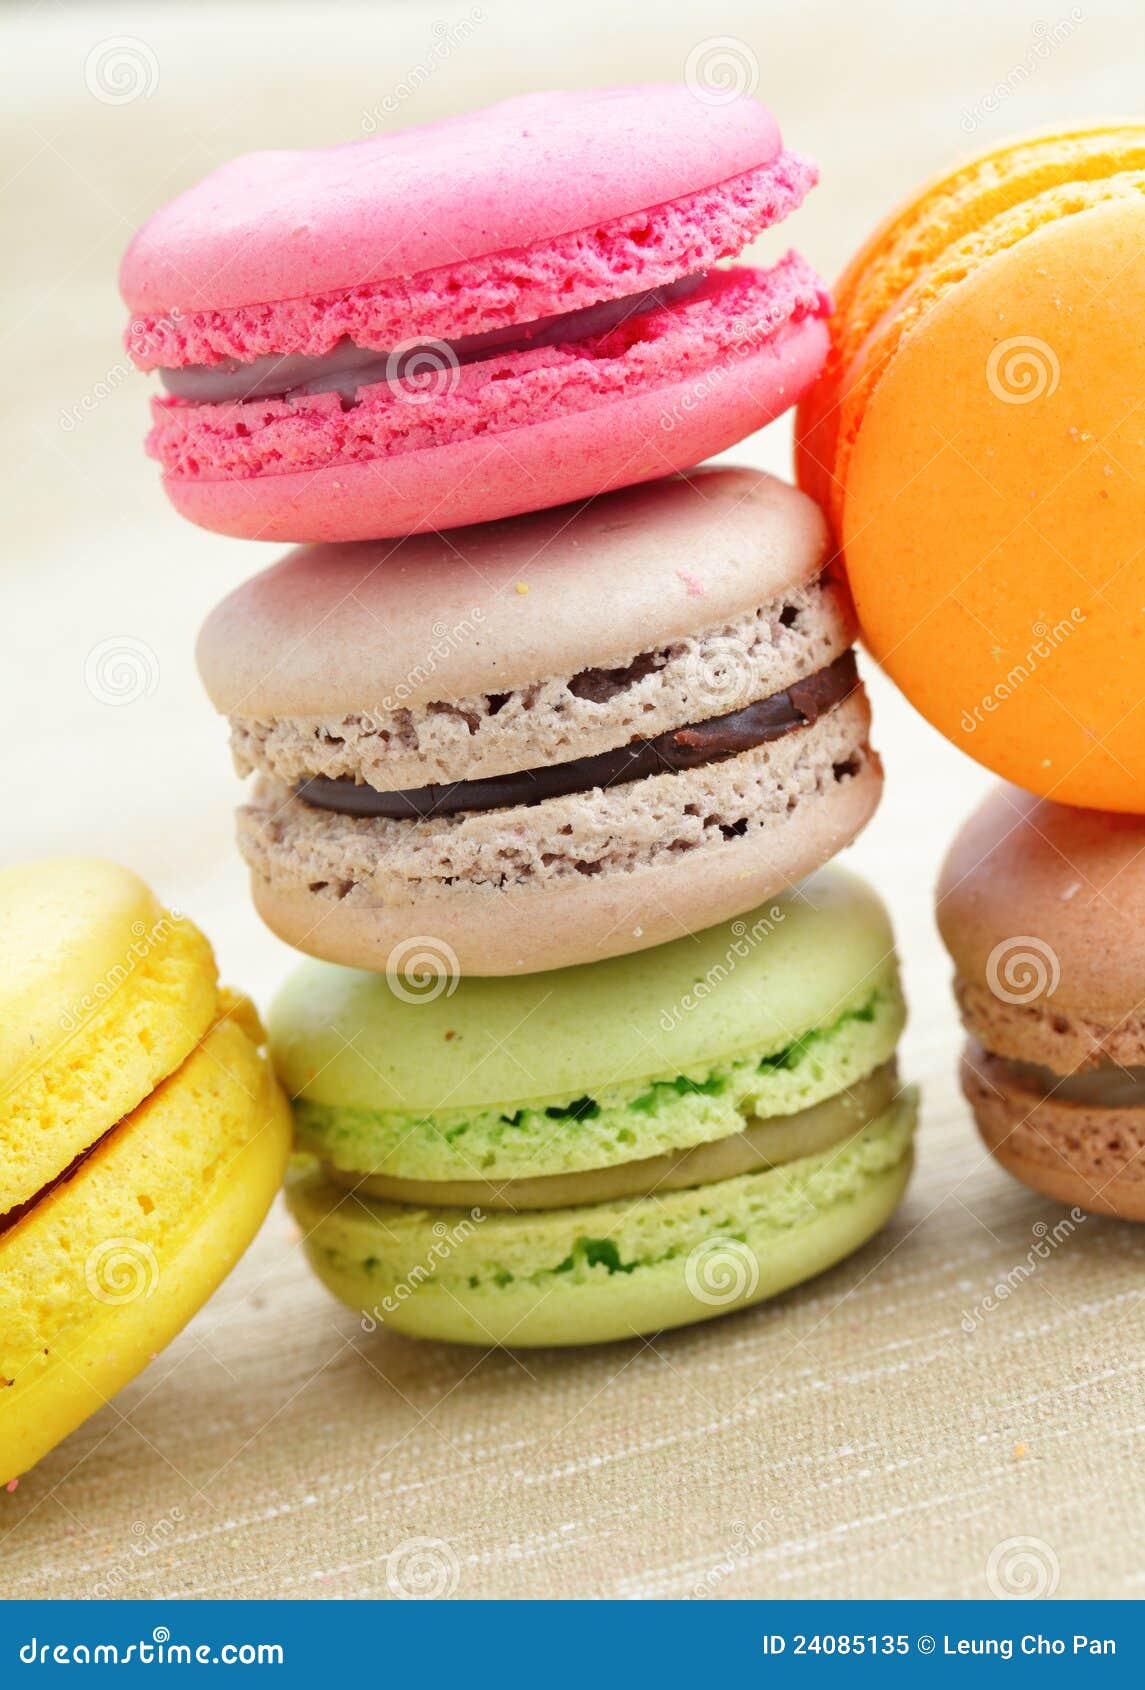 Colorful french macarons stock image. Image of food, cake - 24085135